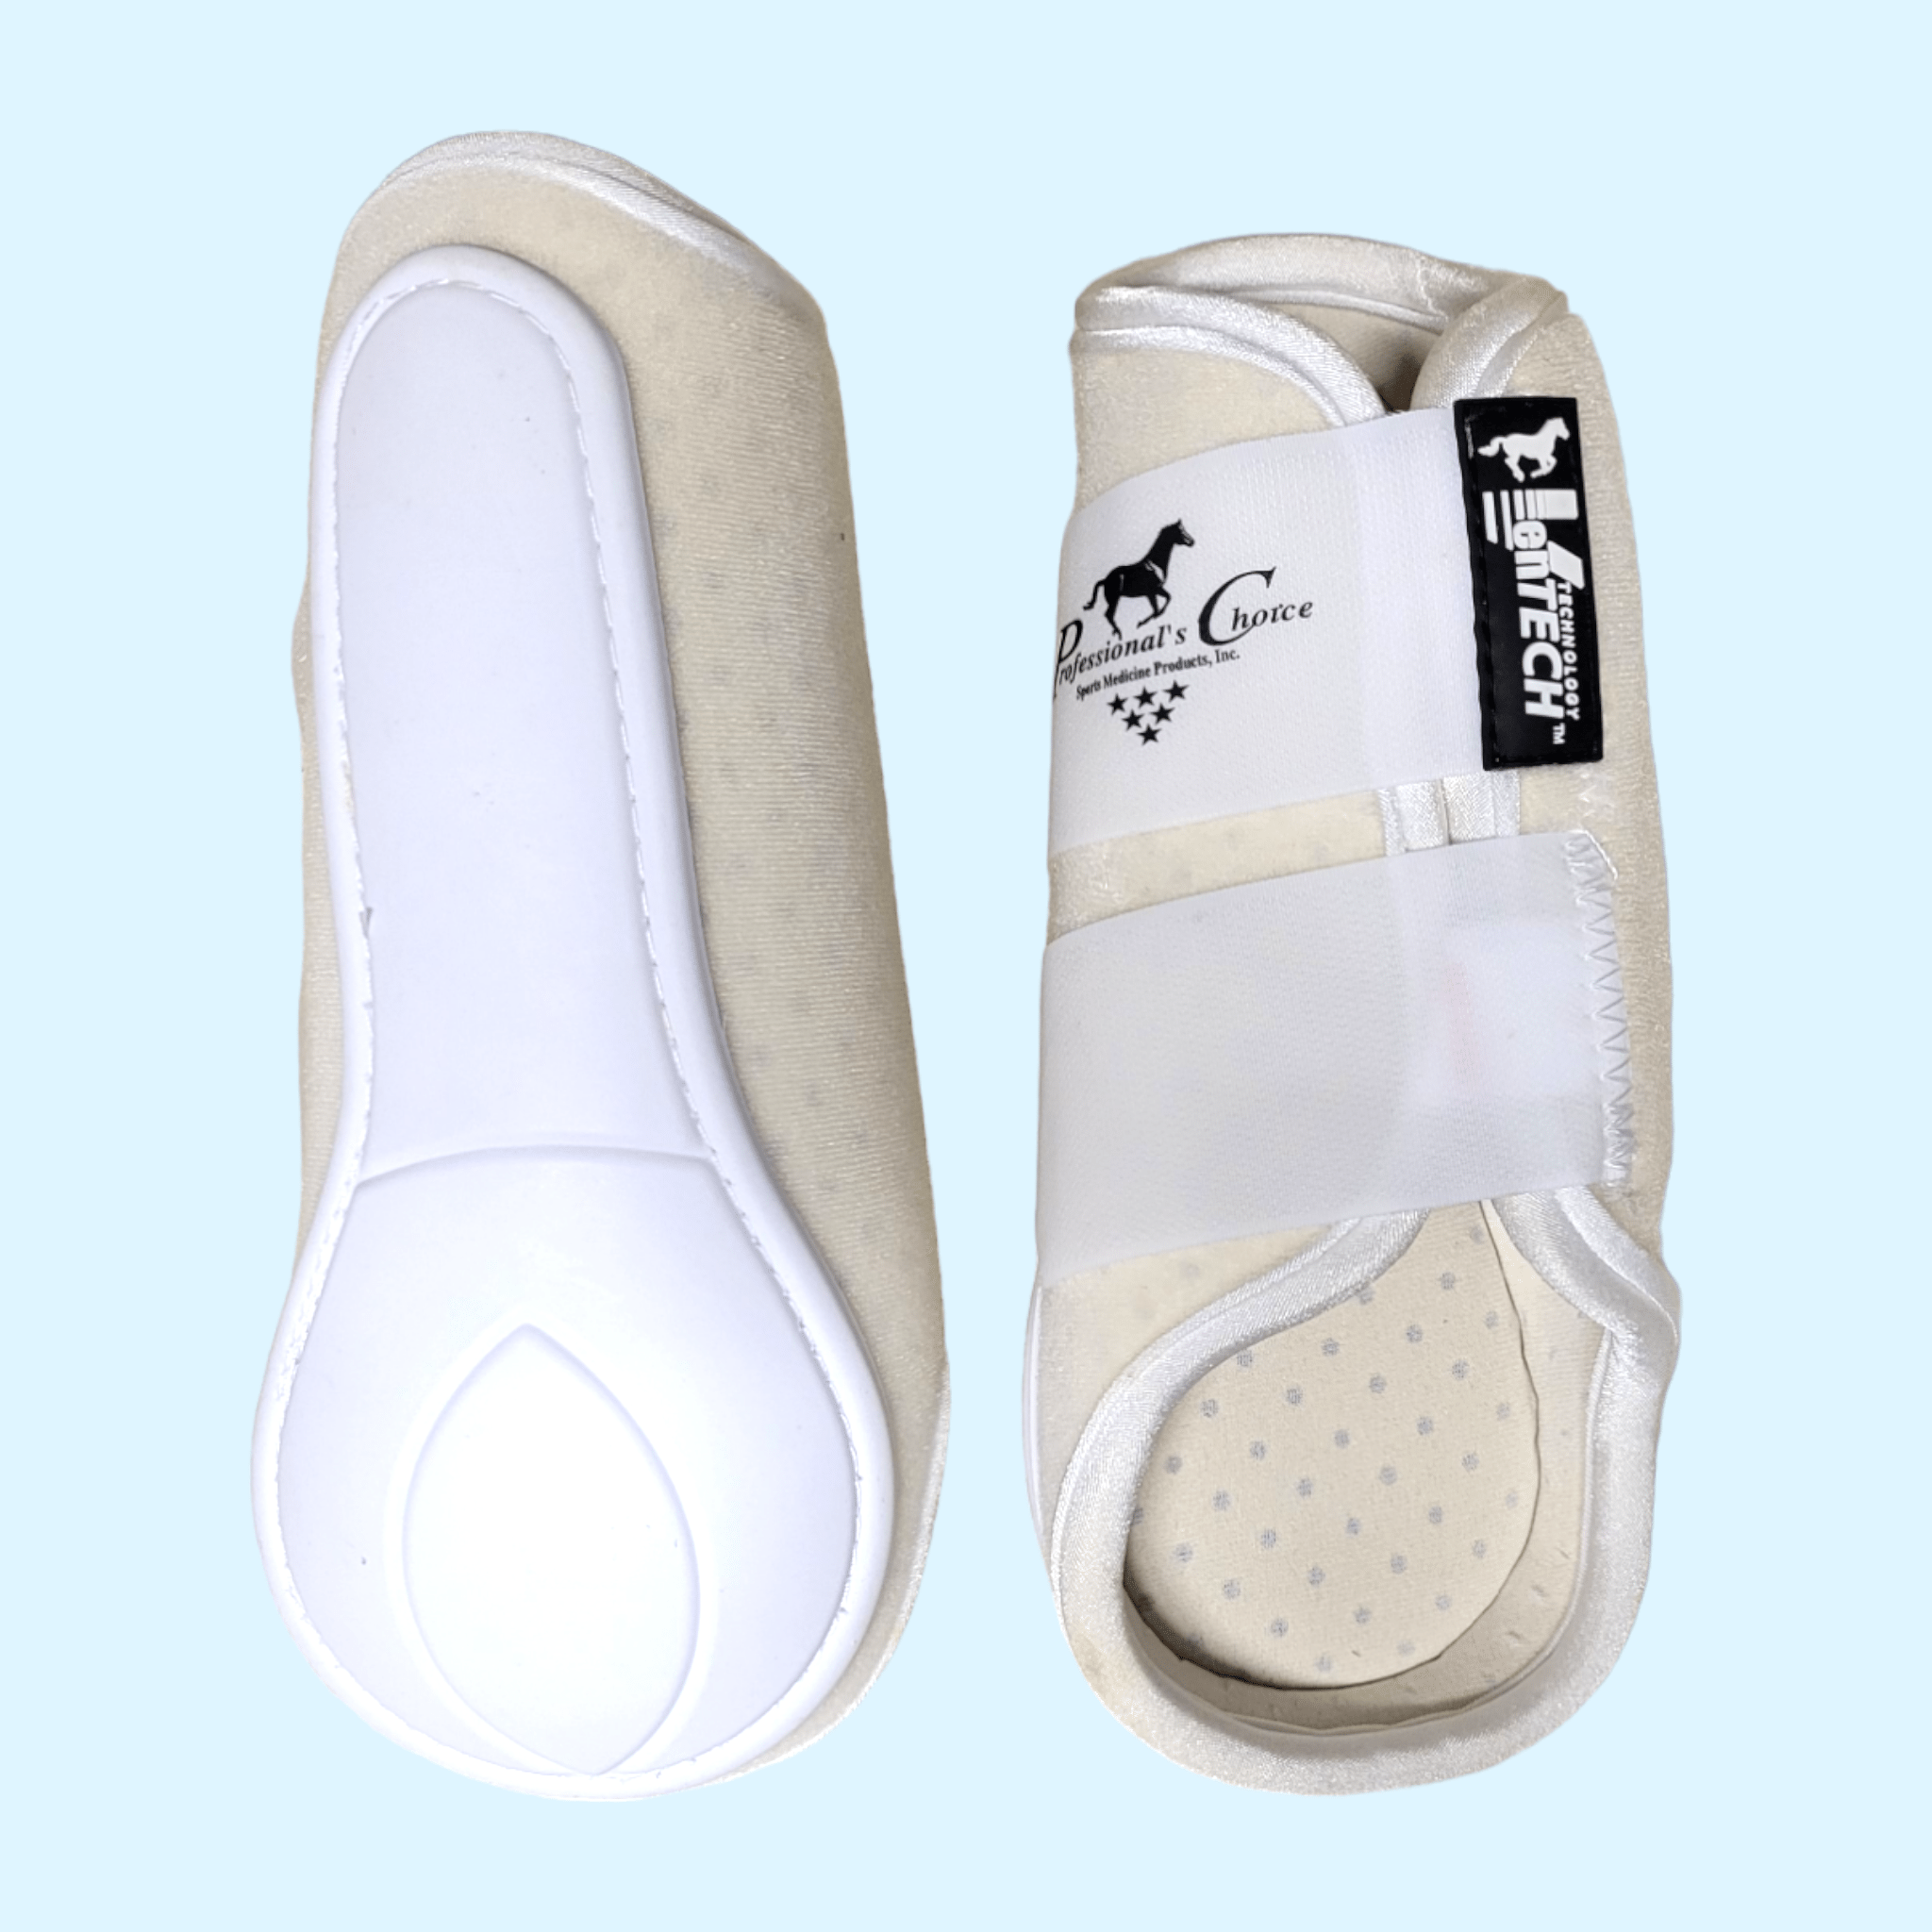 Professional's Choice VenTECH Splint Boots in White - Medium